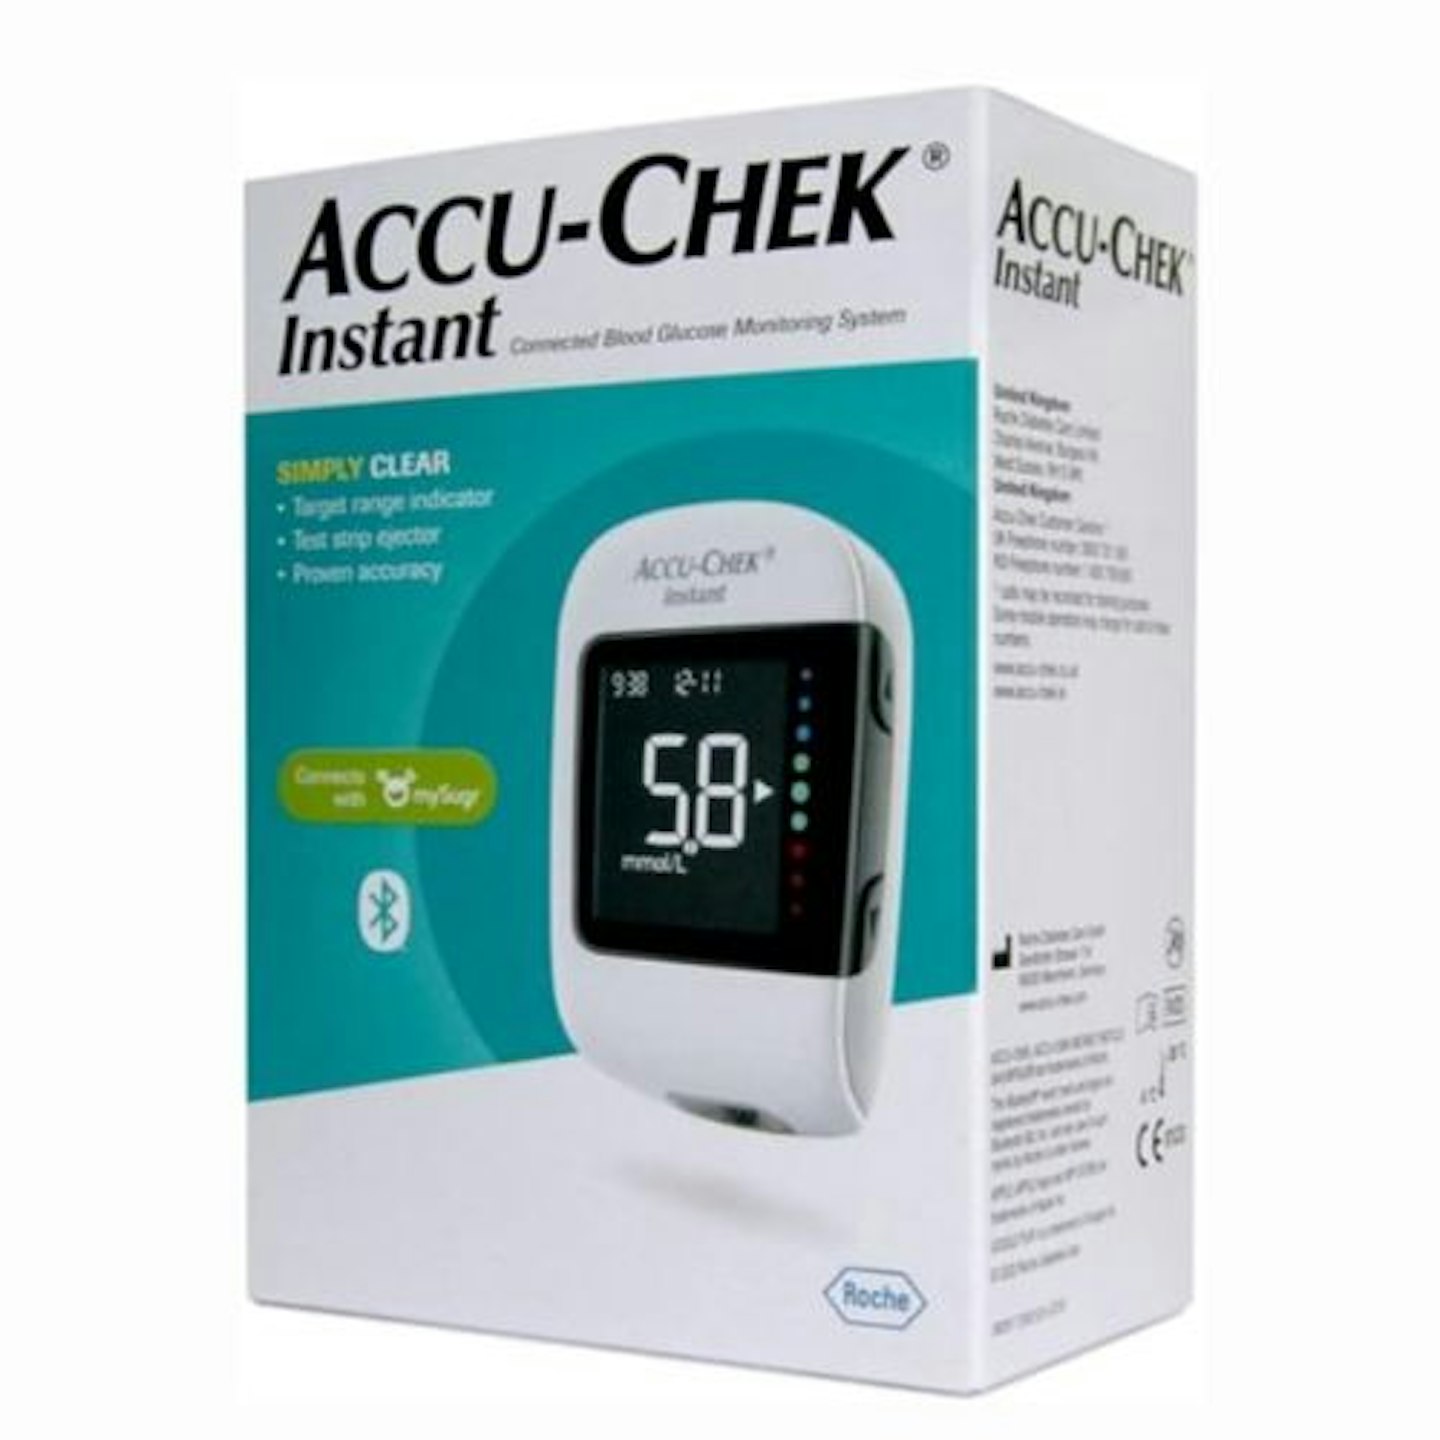 Accu-Chek® Instant Blood Glucose System